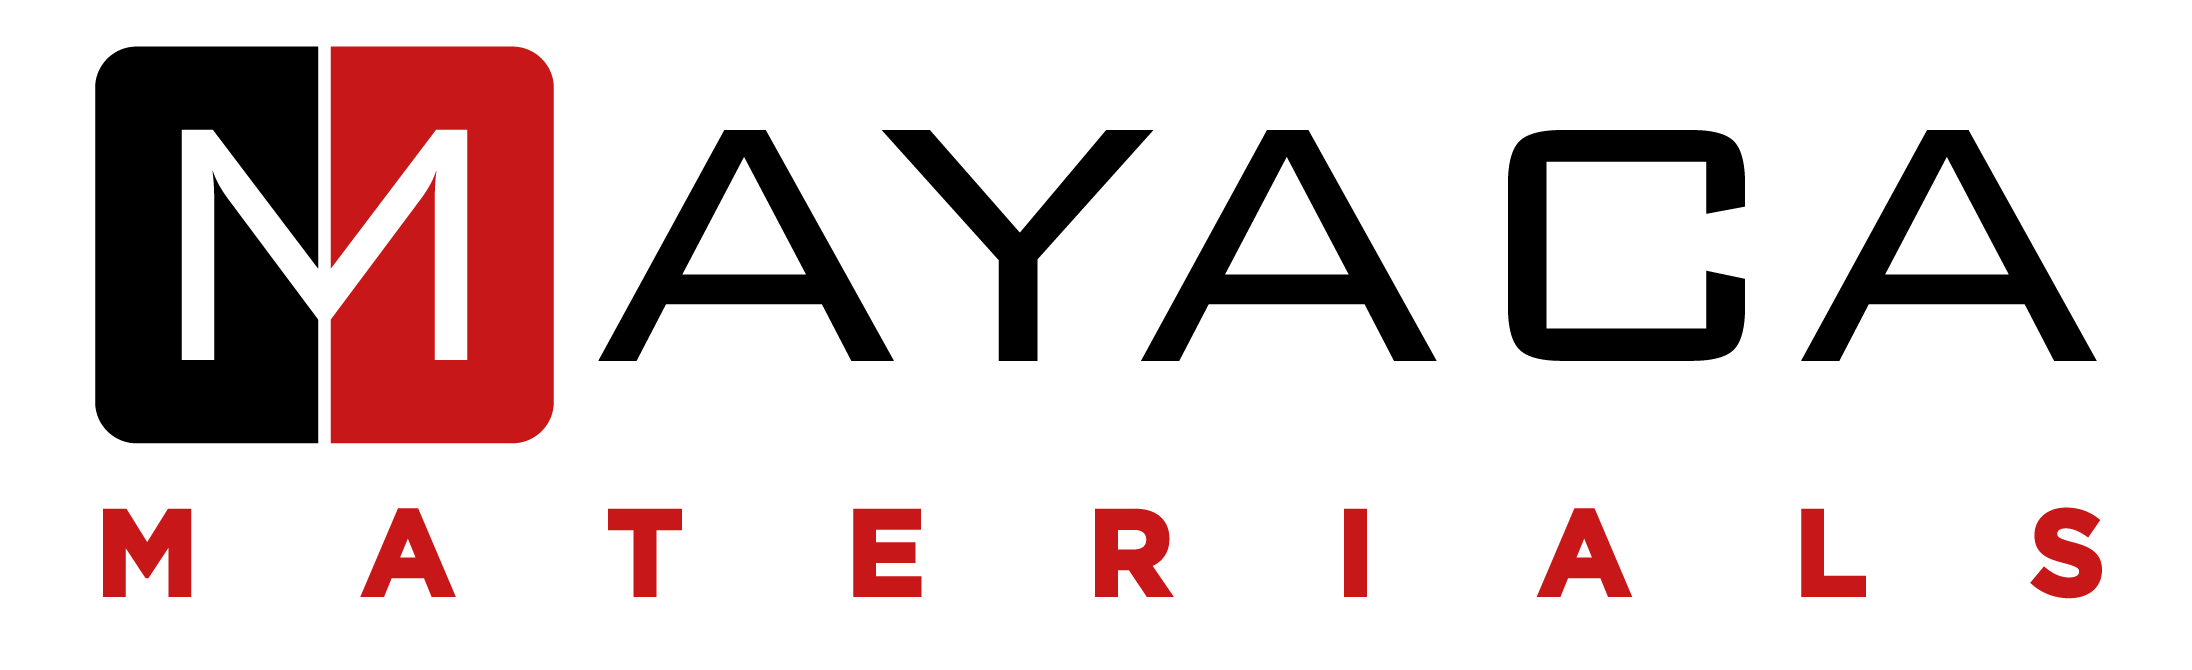 Mayaca Materials